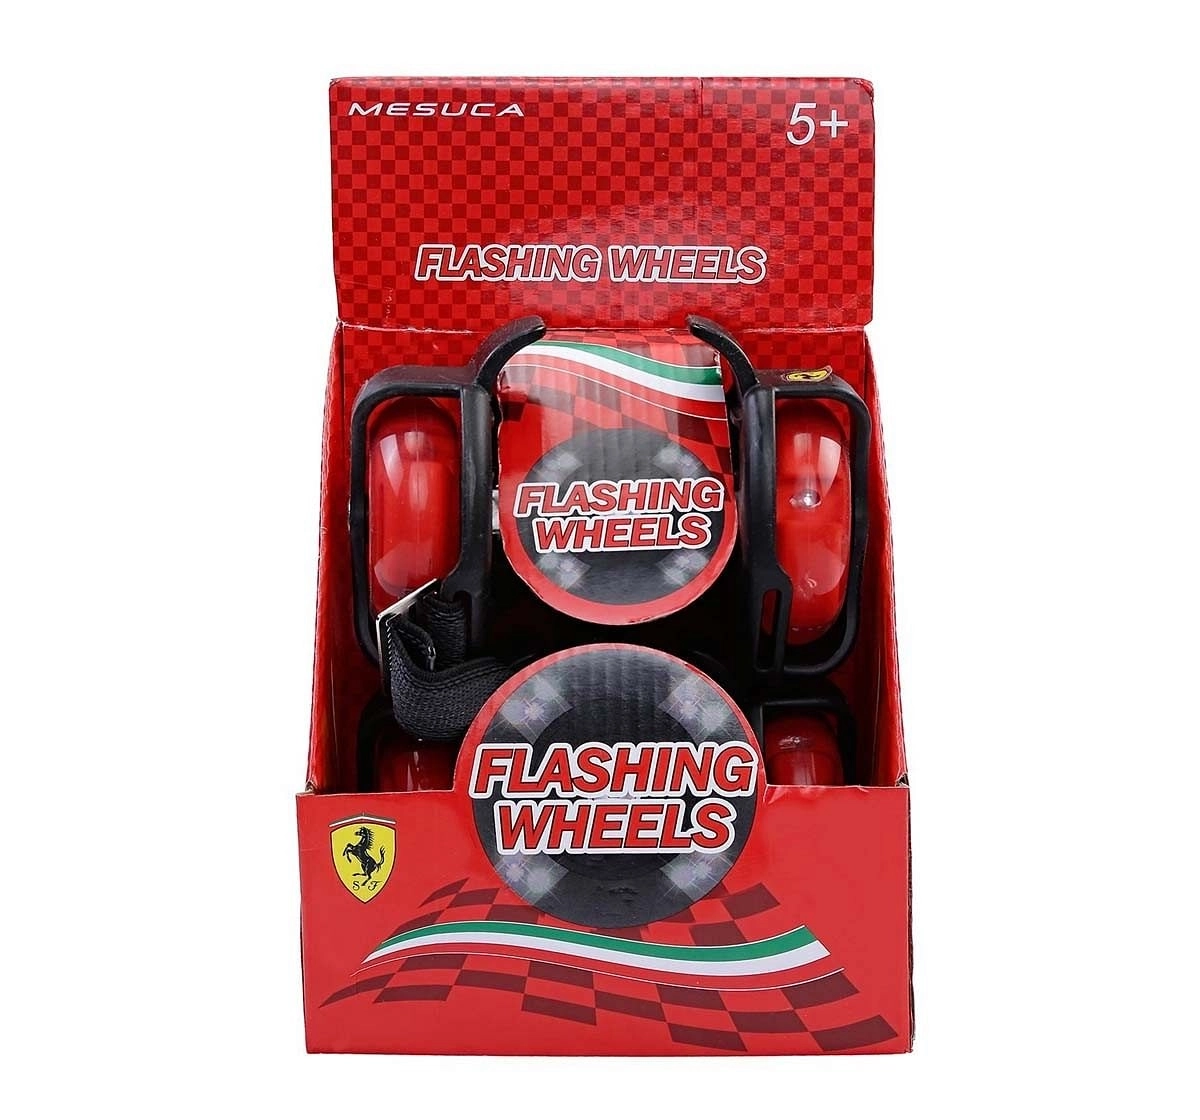 Ferrari Flashing Wheels Roller Skates and Skateboards for Kids age 5Y+ (Black)